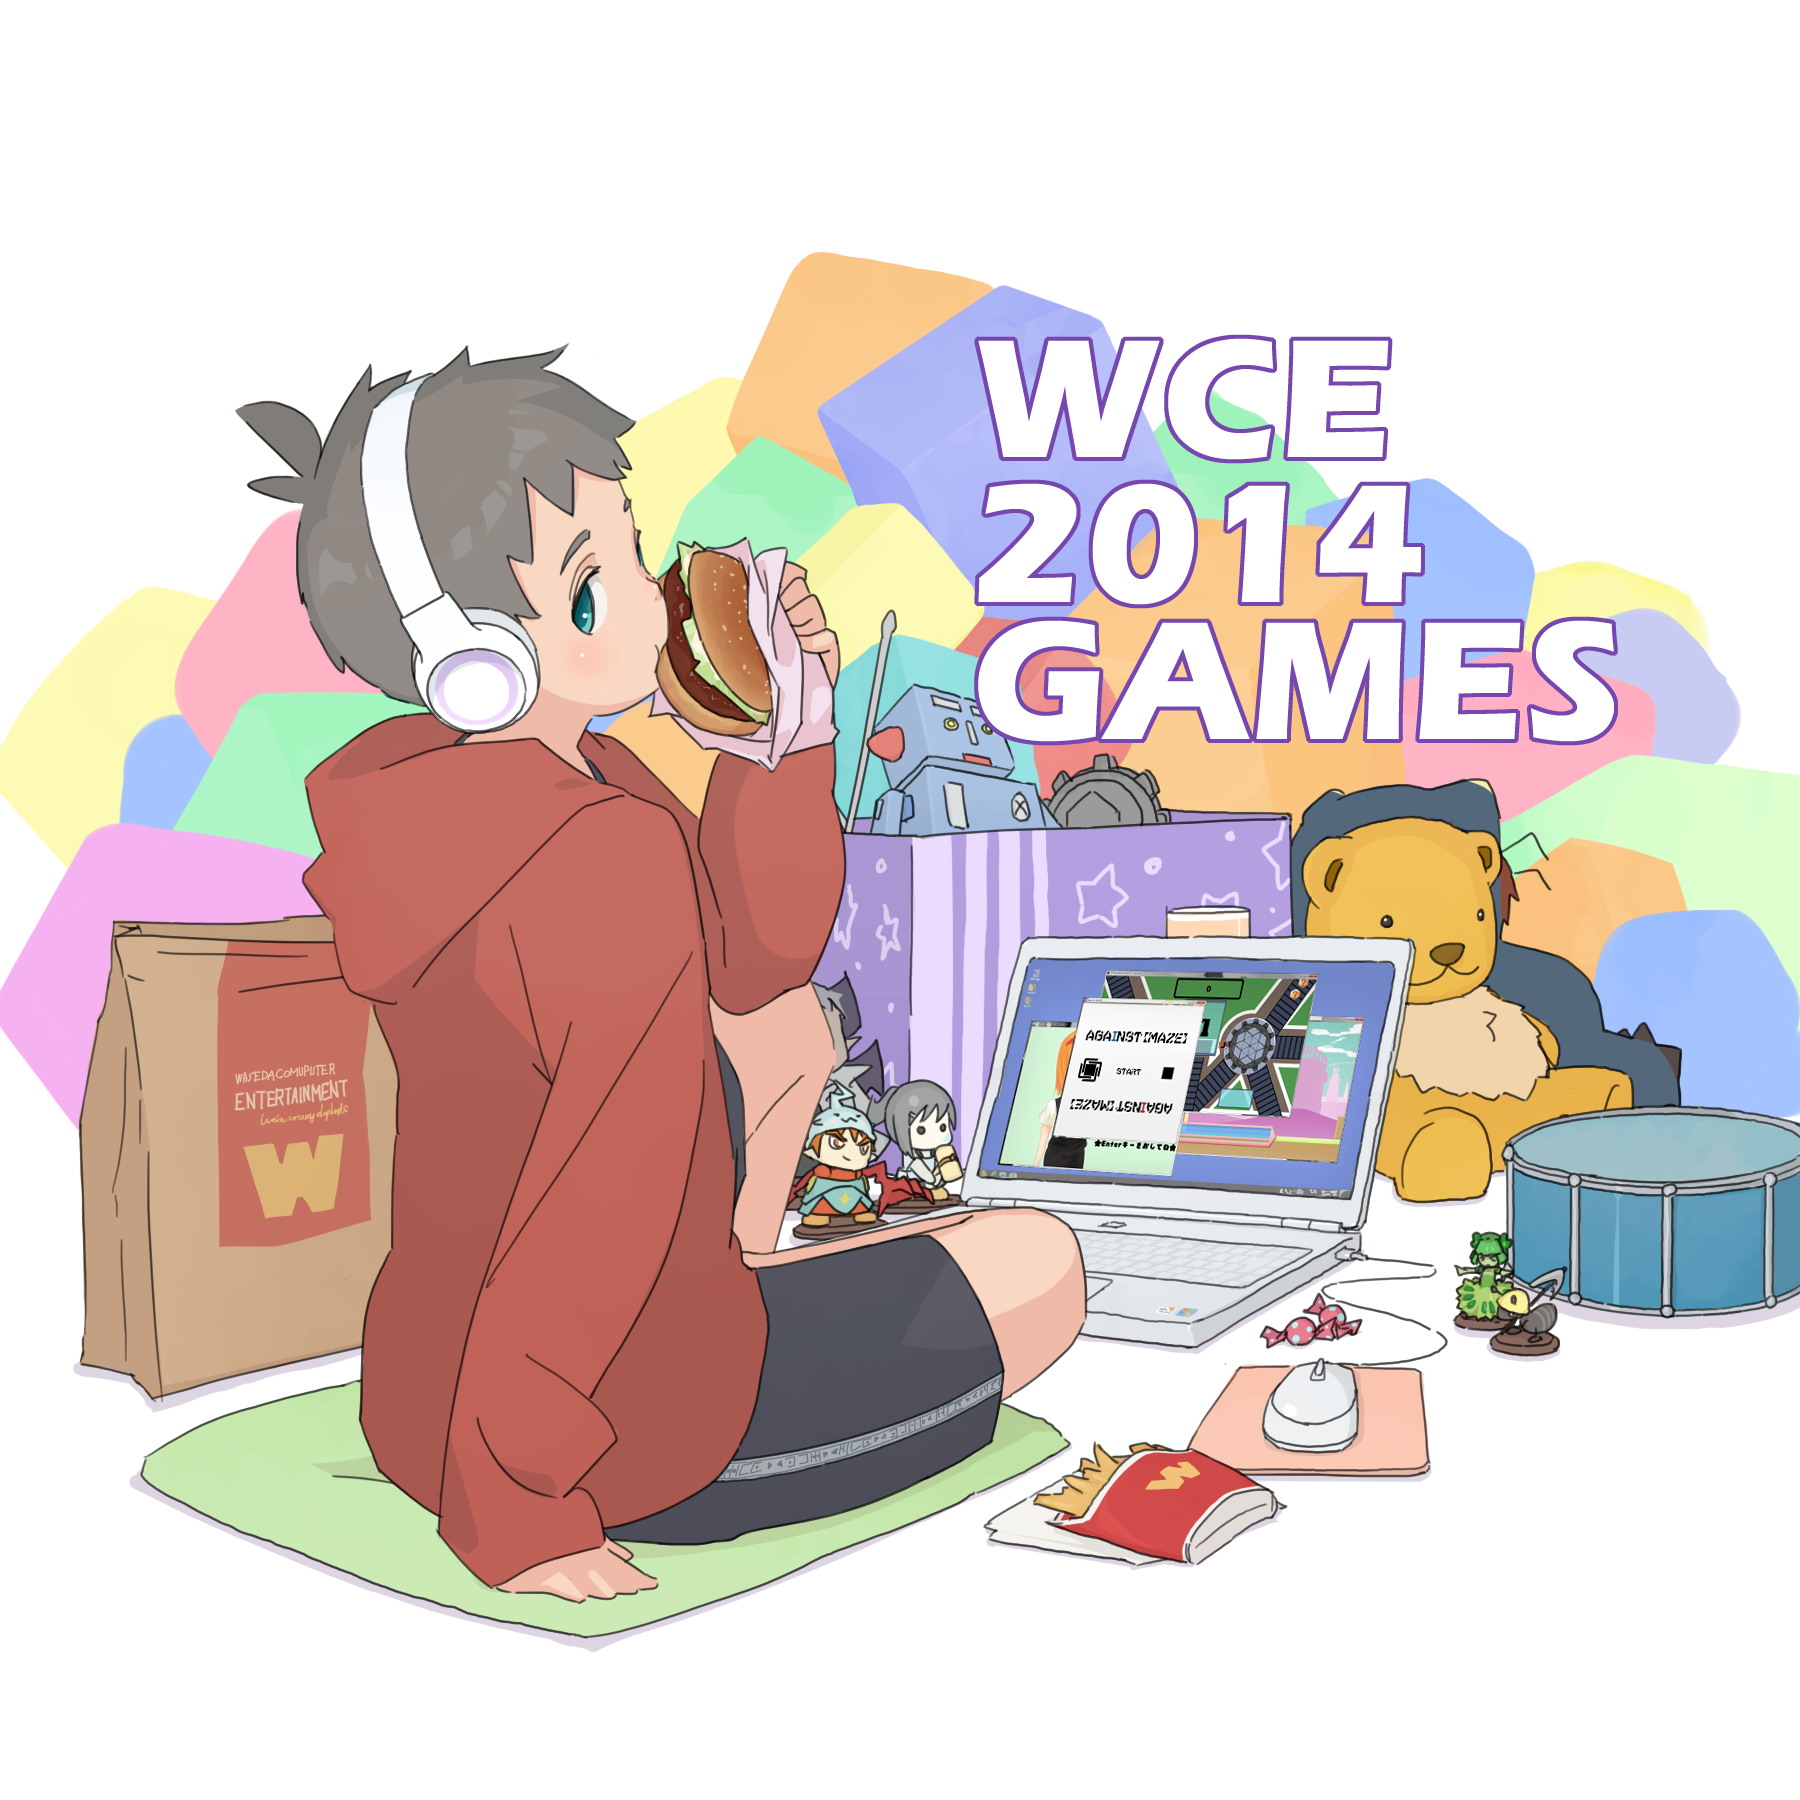 WCE 2014 GAMES